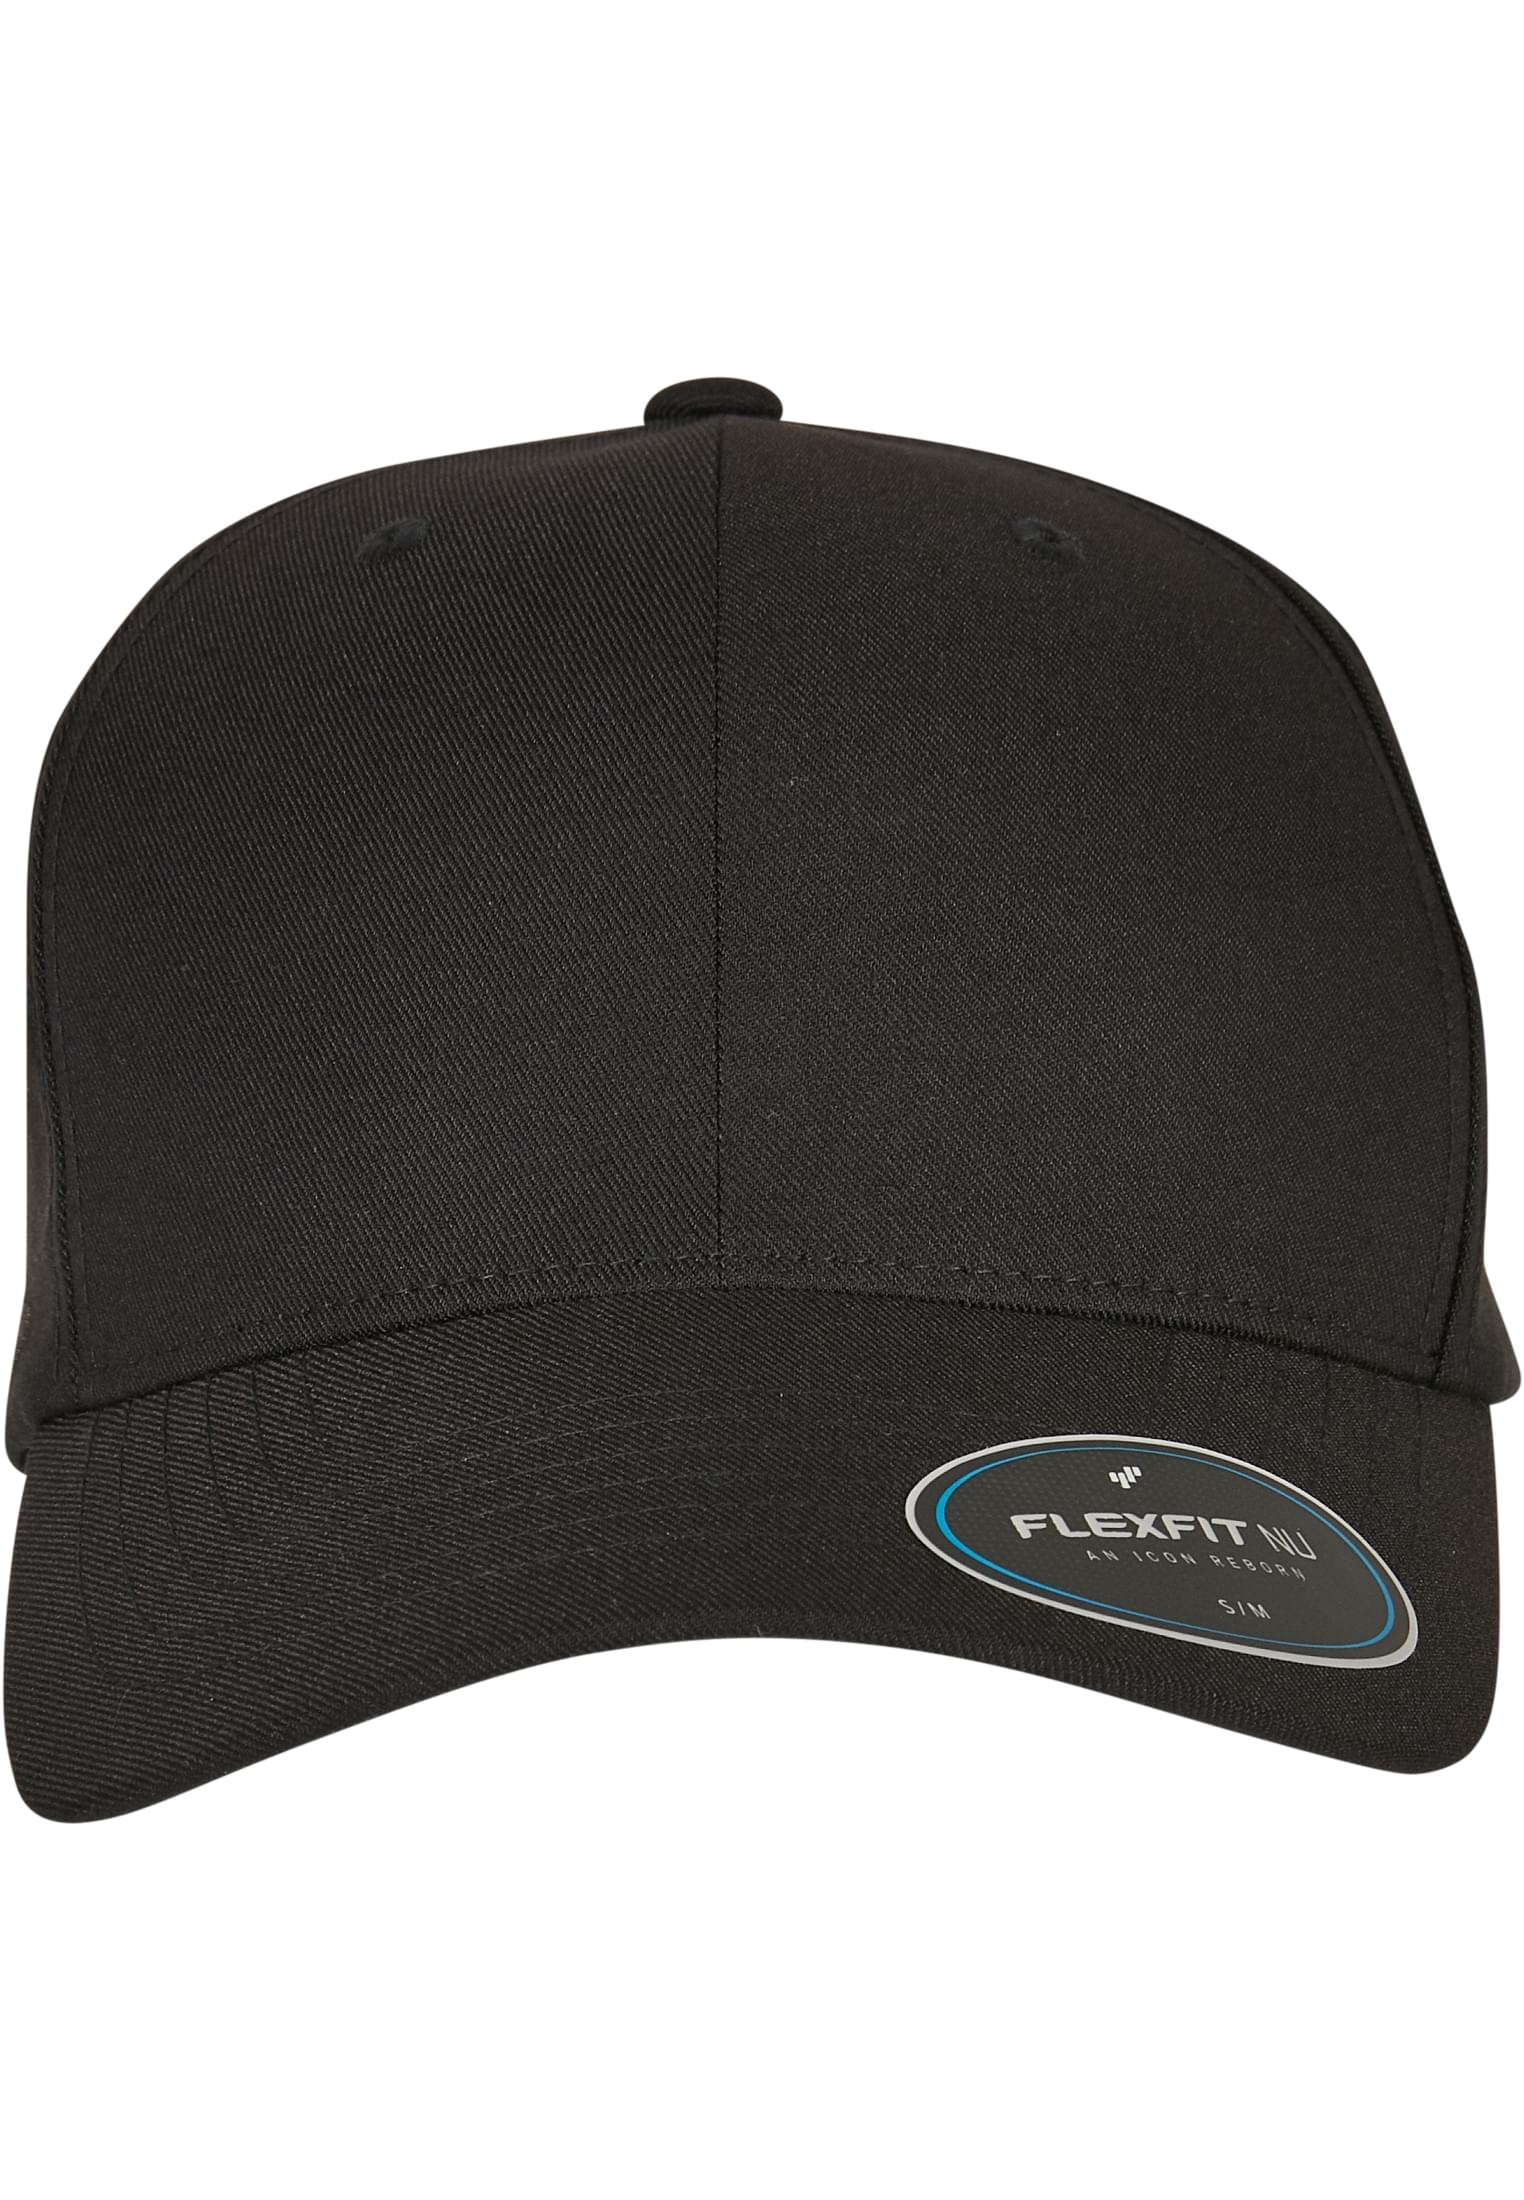 FLEXFIT NU® CAP Black